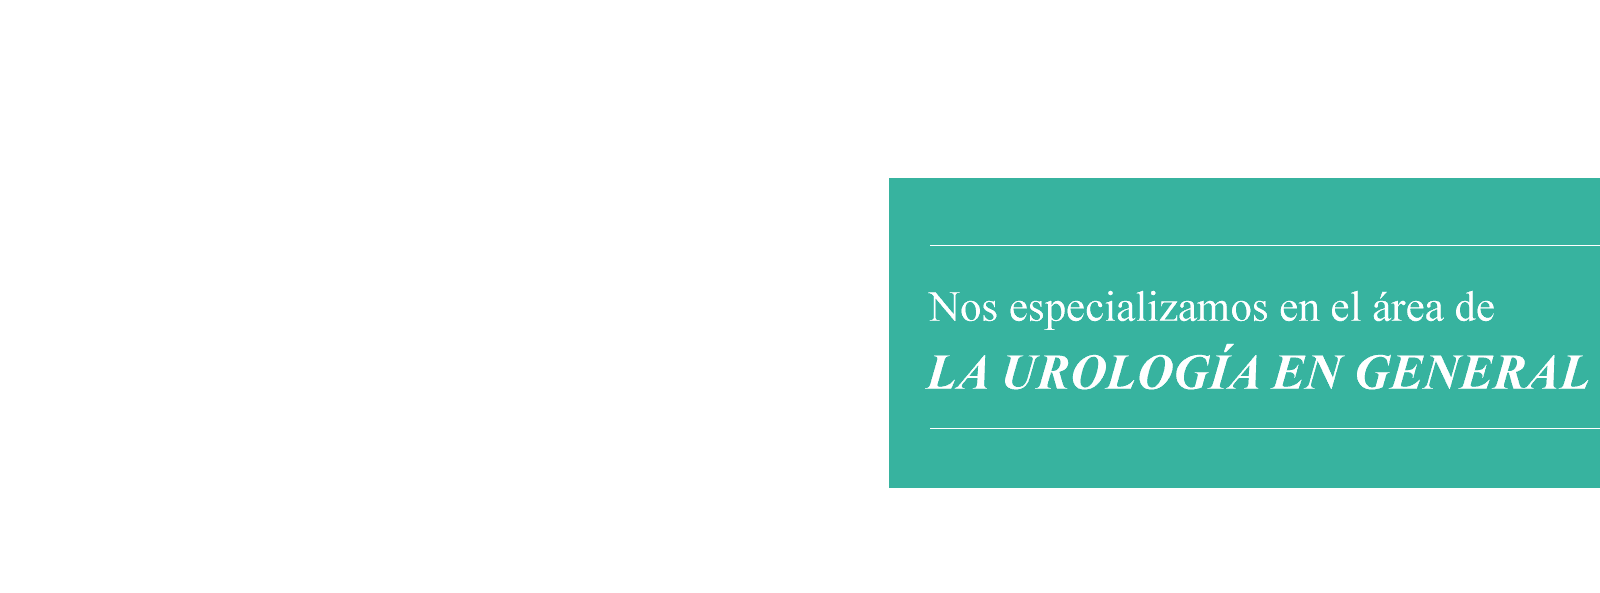 Urología Dr. Melchor y Dr. Iglesias banner